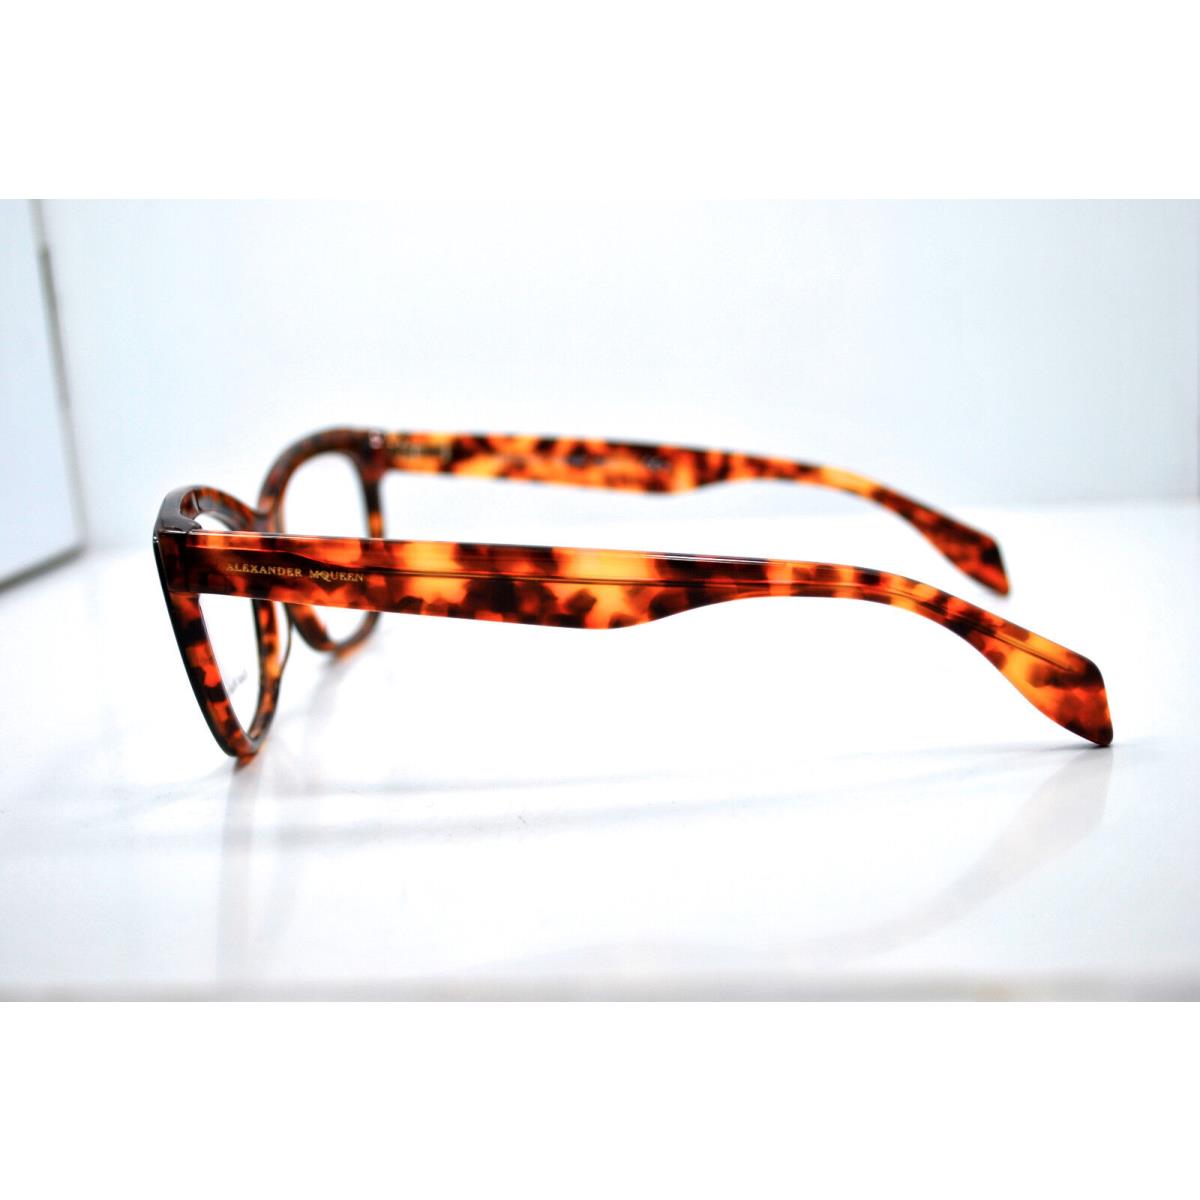 Alexander McQueen eyeglasses  - Multi-Color Frame 2